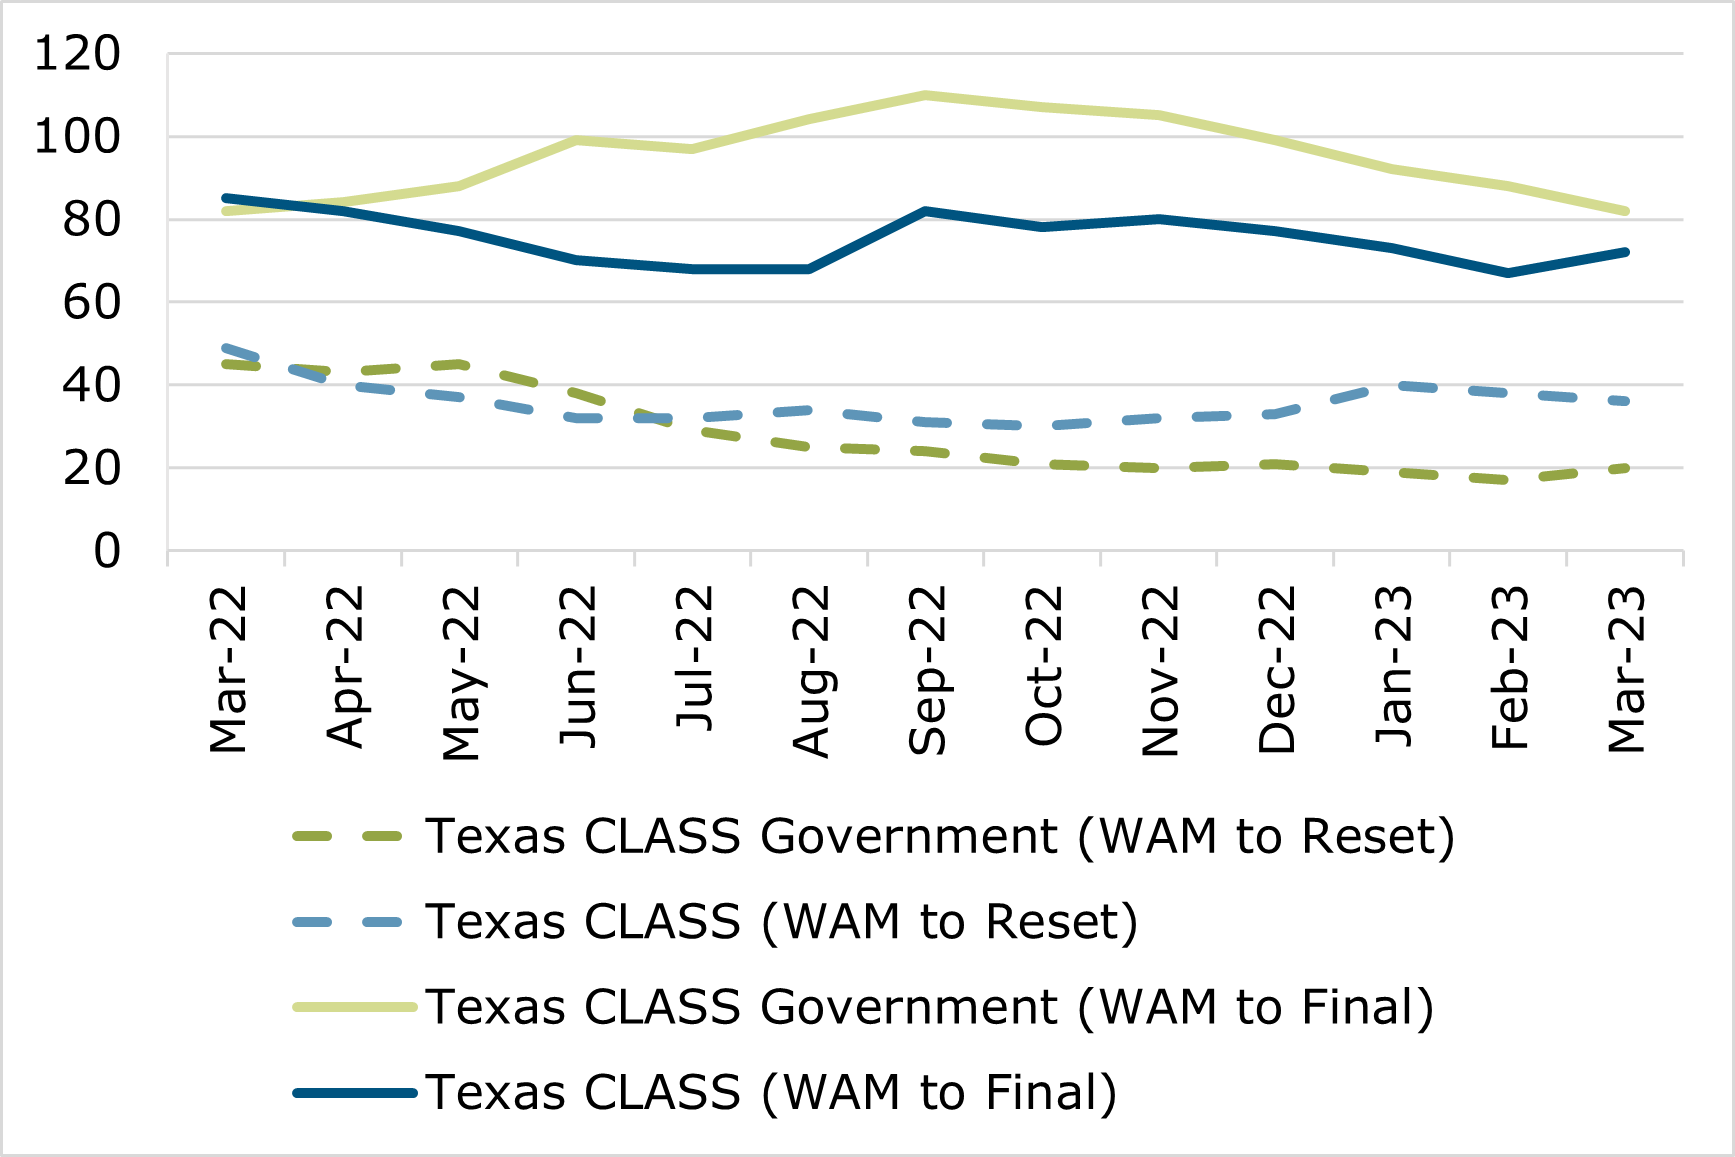 03.23 - Texas CLASS WAM Comparison